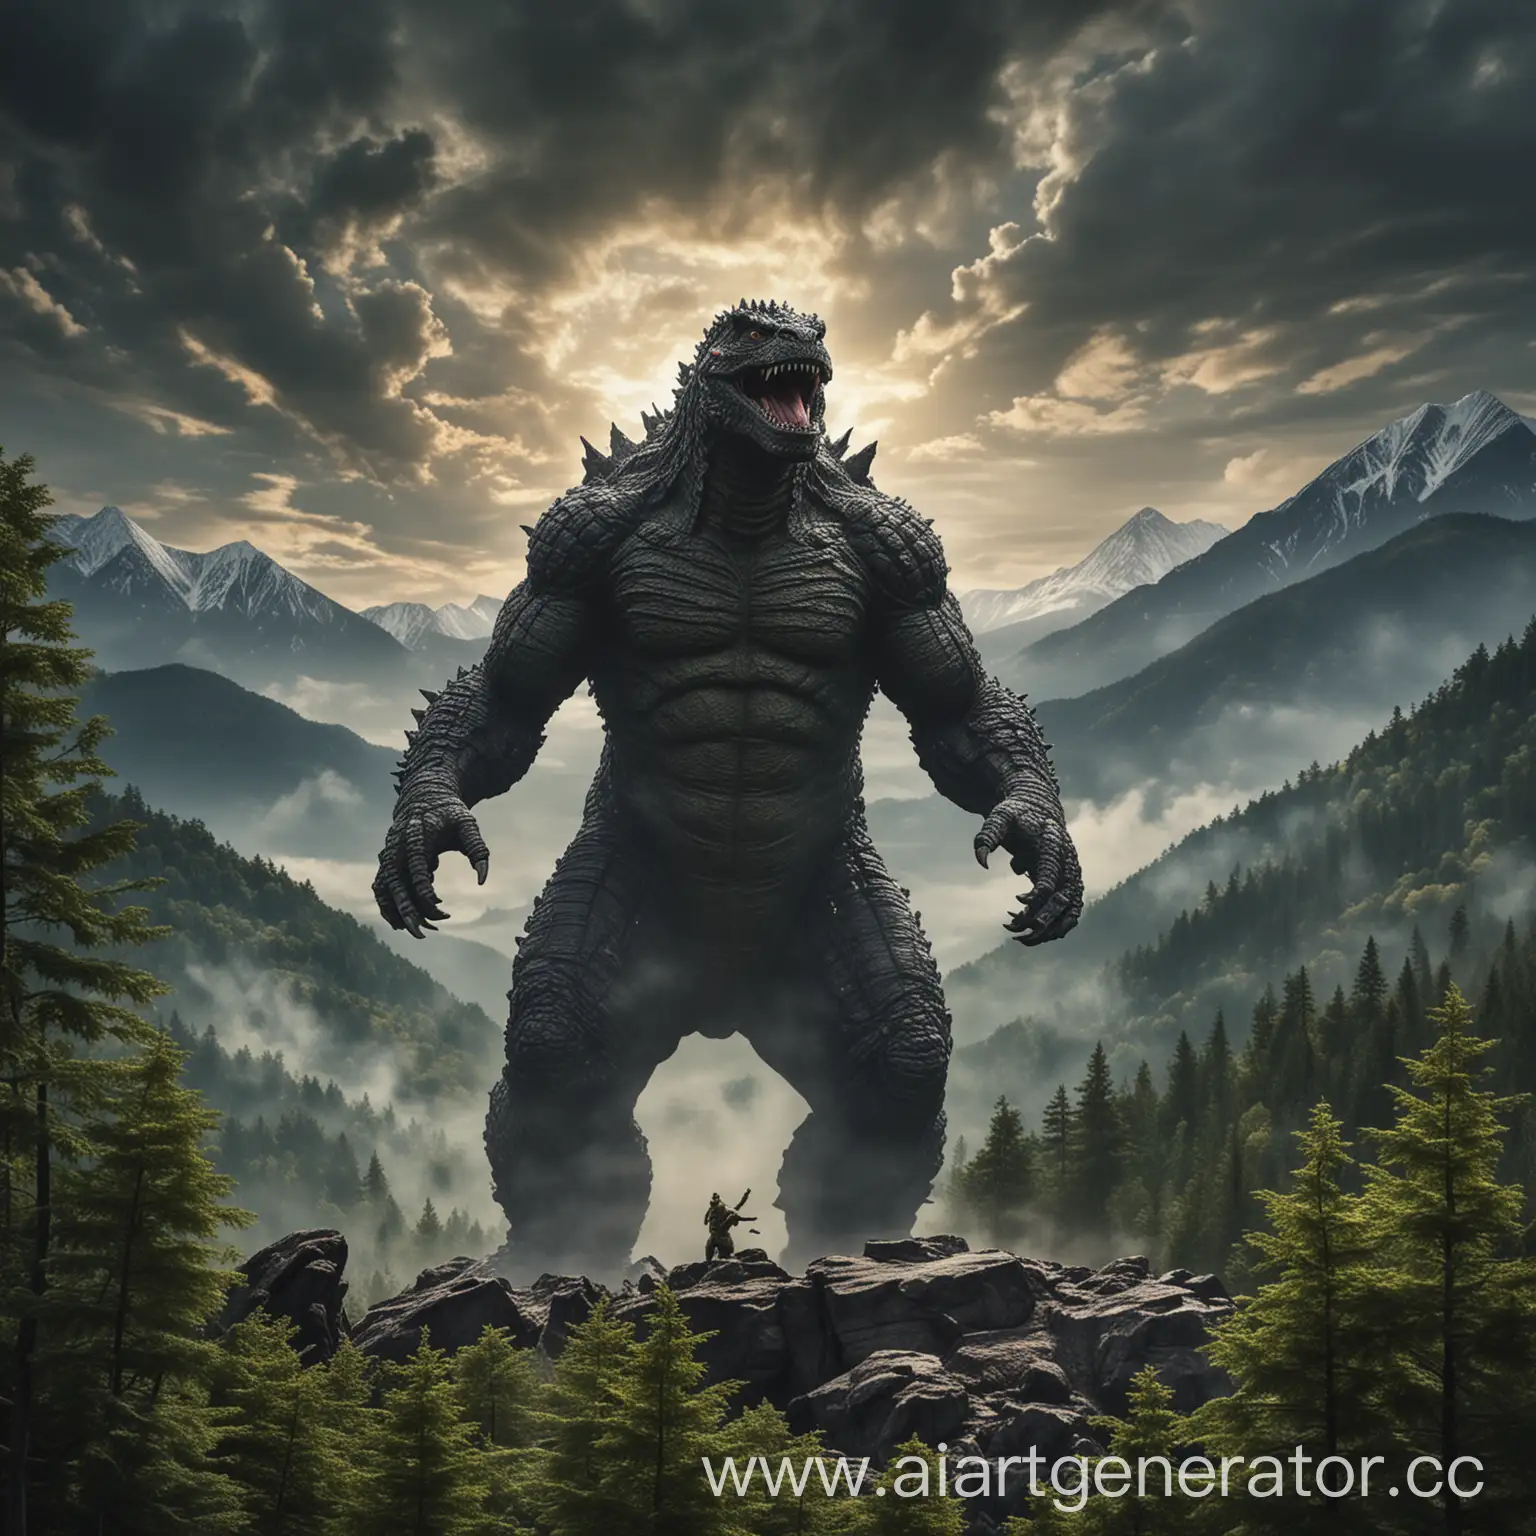 Majestic-Godzilla-Standing-Against-Mountainous-Forest-Backdrop